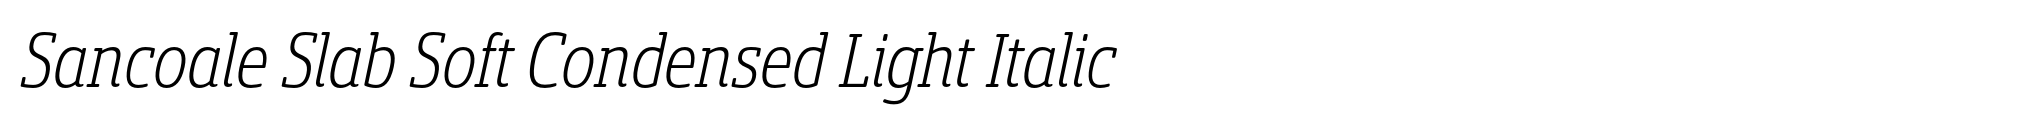 Sancoale Slab Soft Condensed Light Italic image